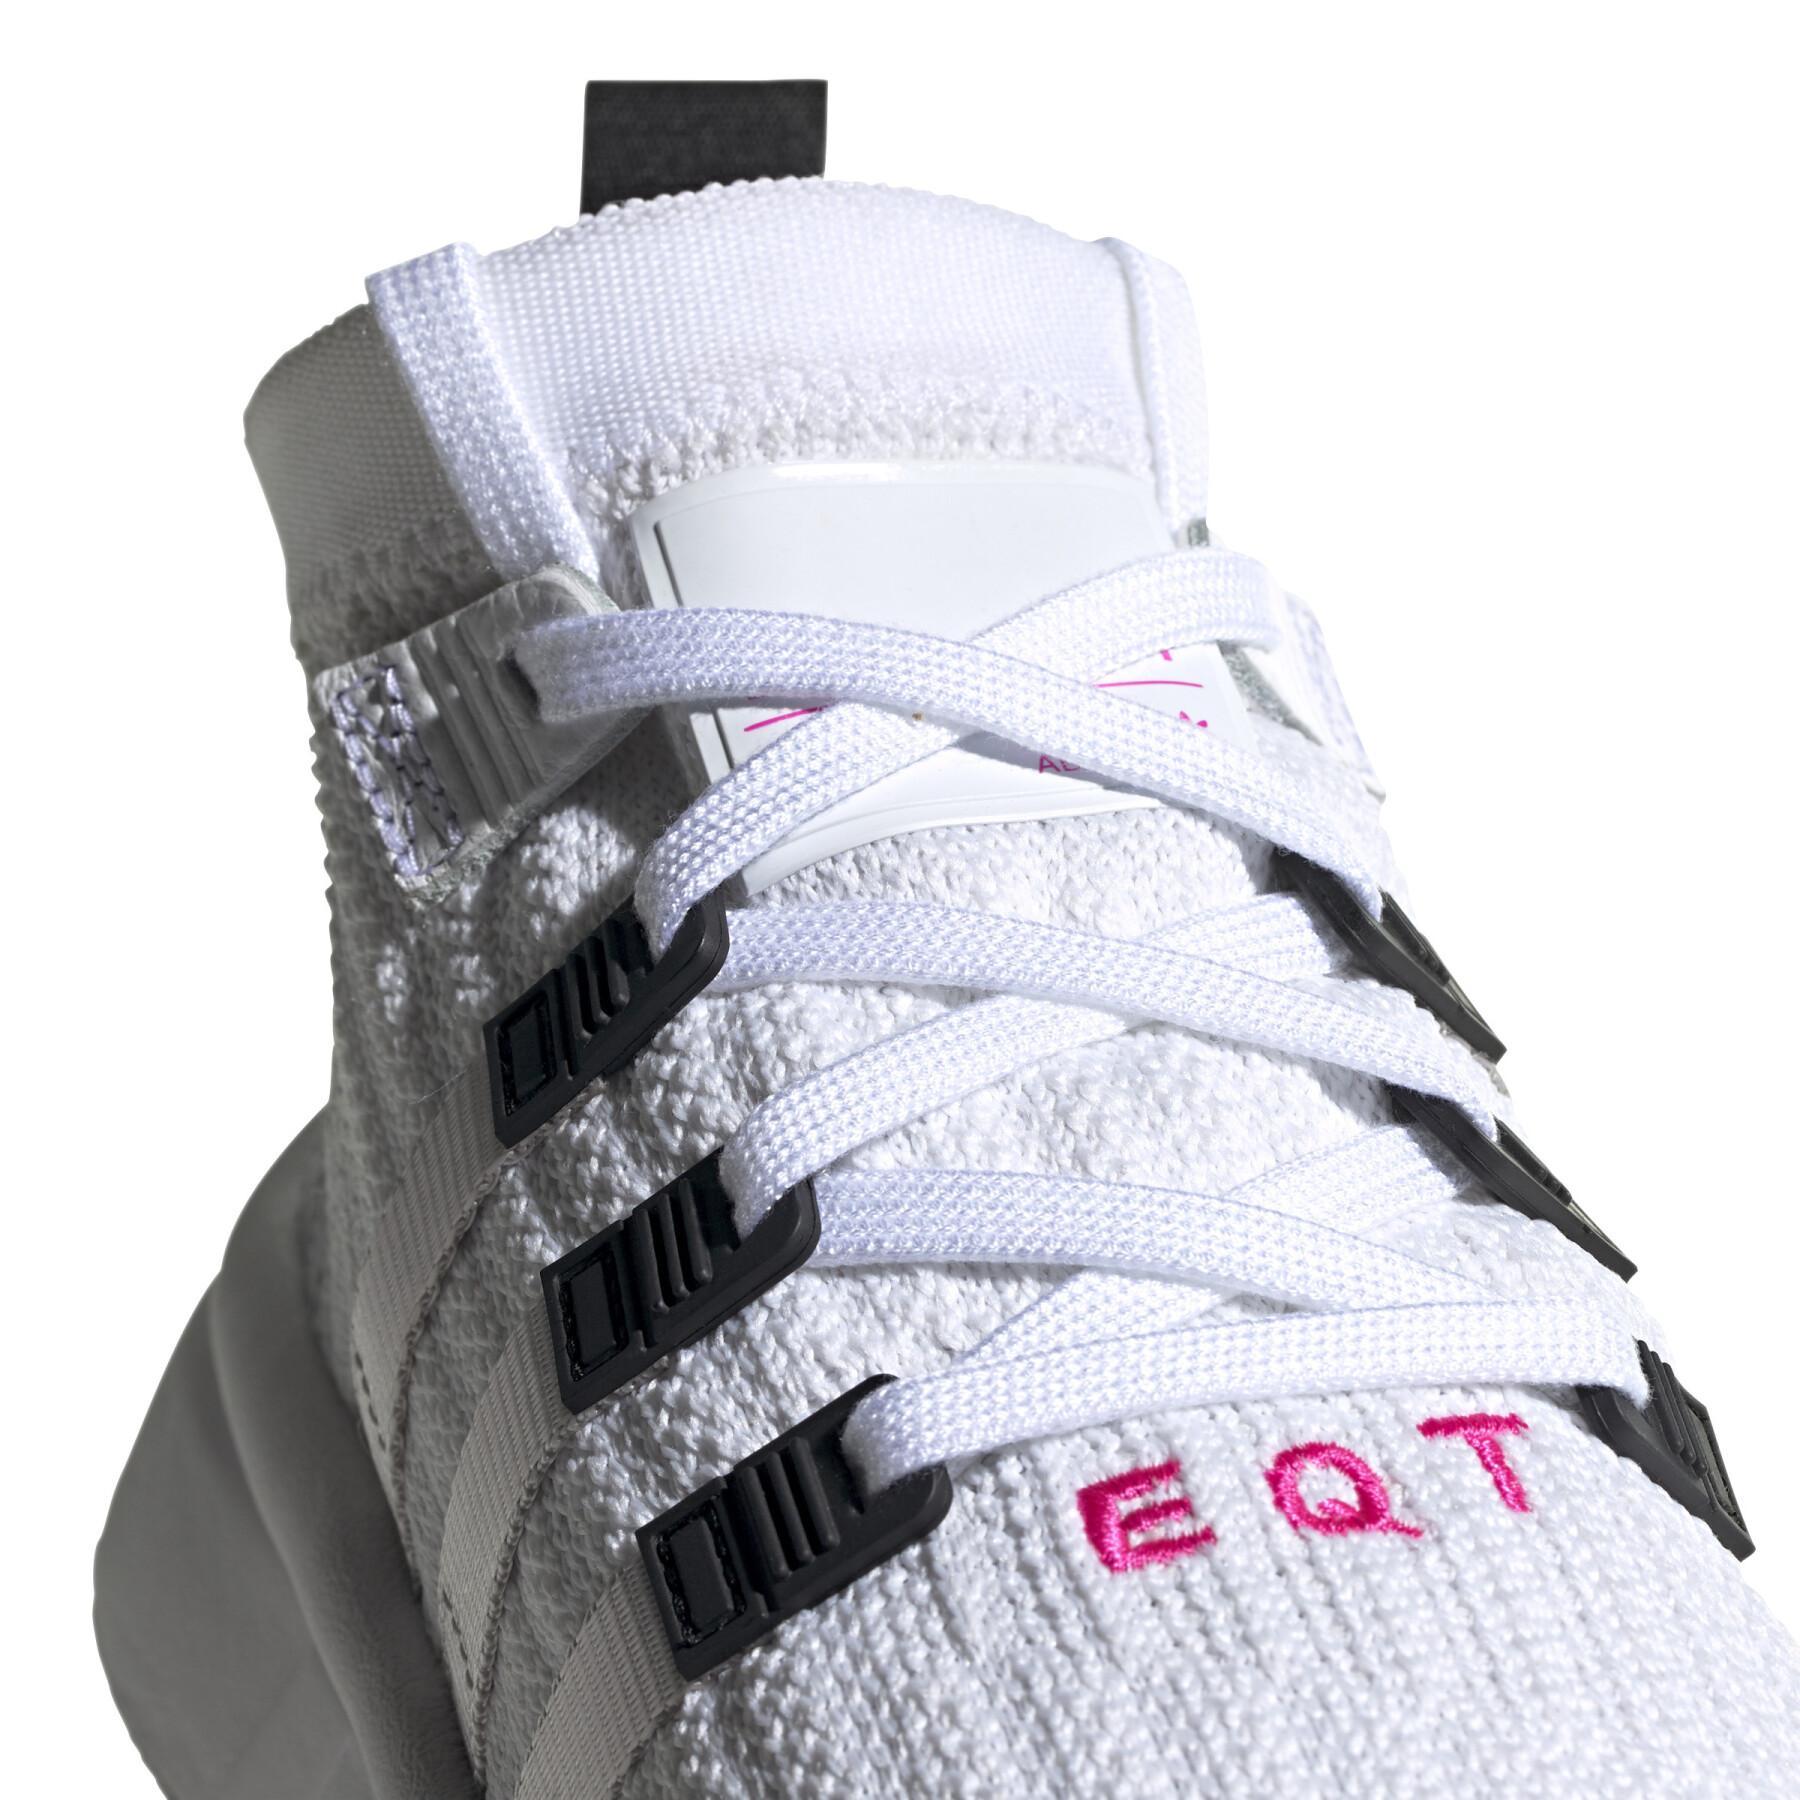 Sneakers adidas EQT Support Mid ADV Primeknit